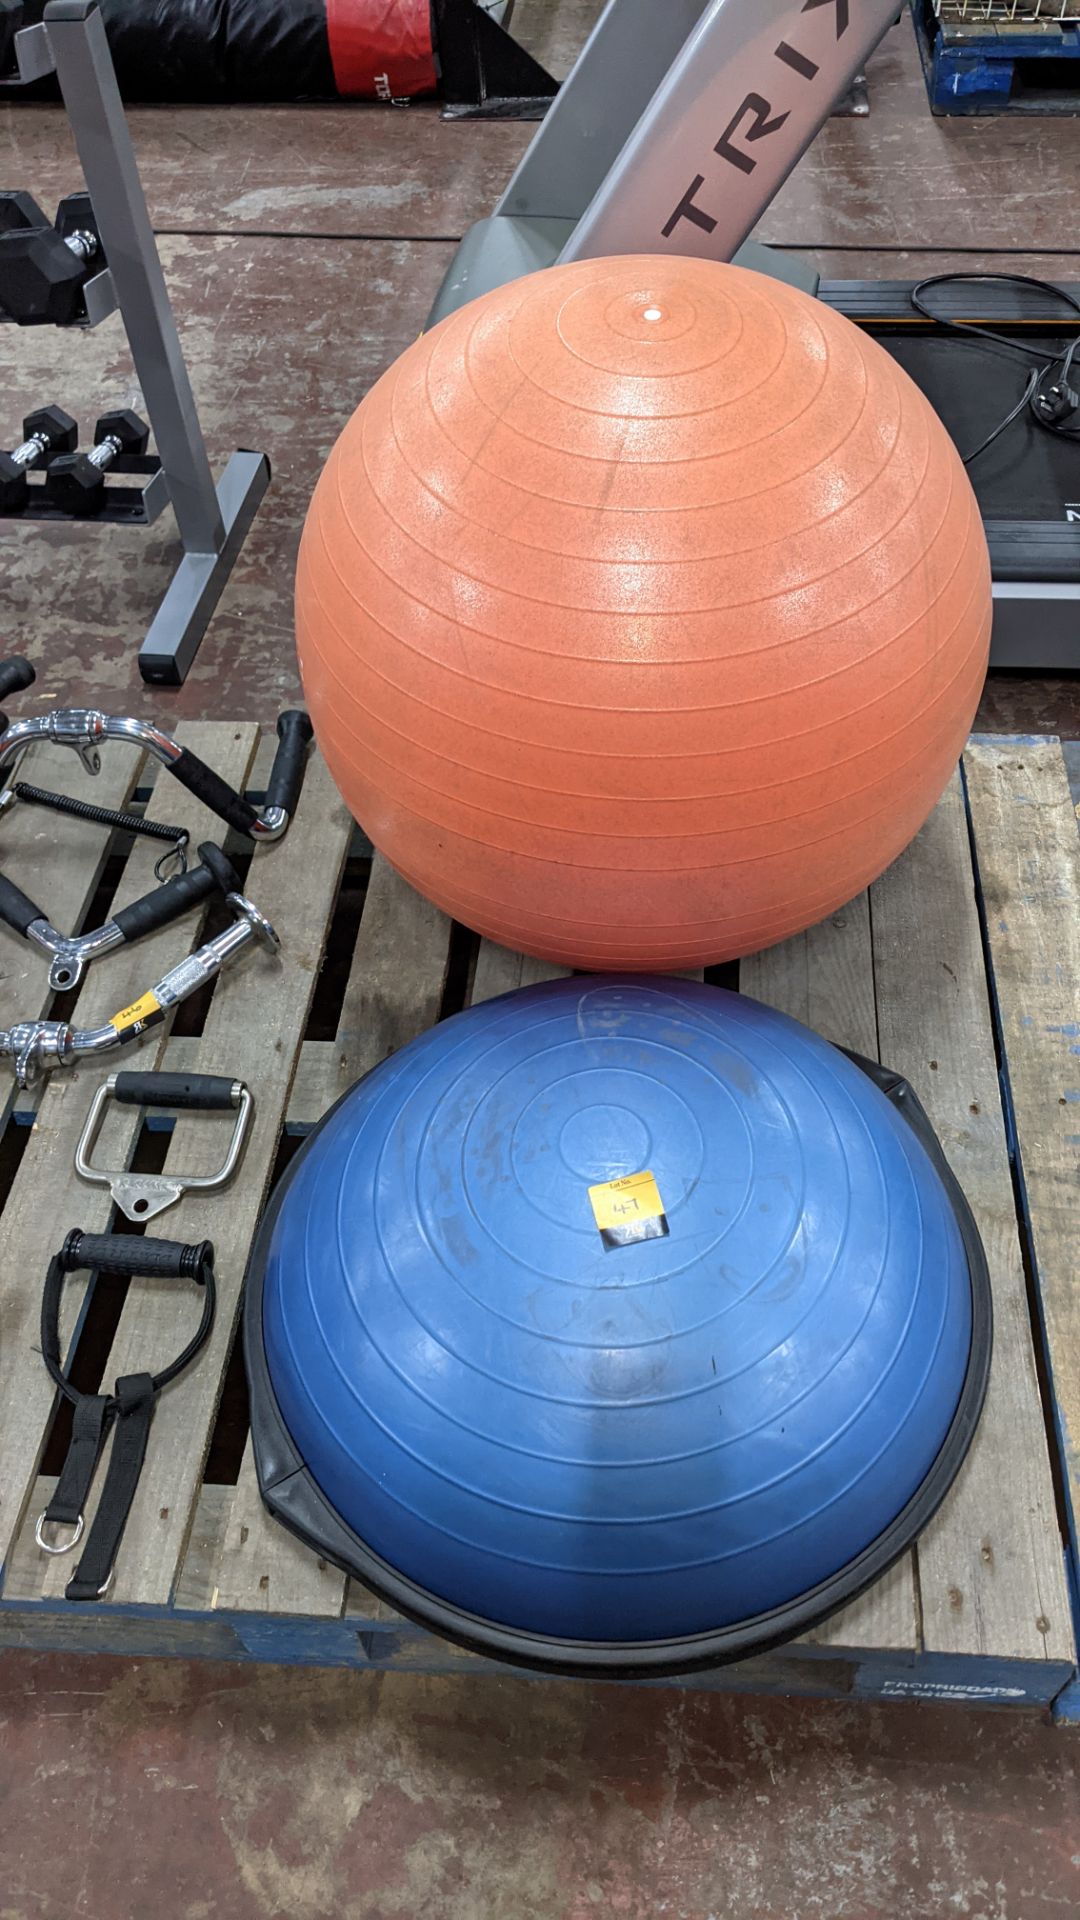 Balance board plus large rubber training ball